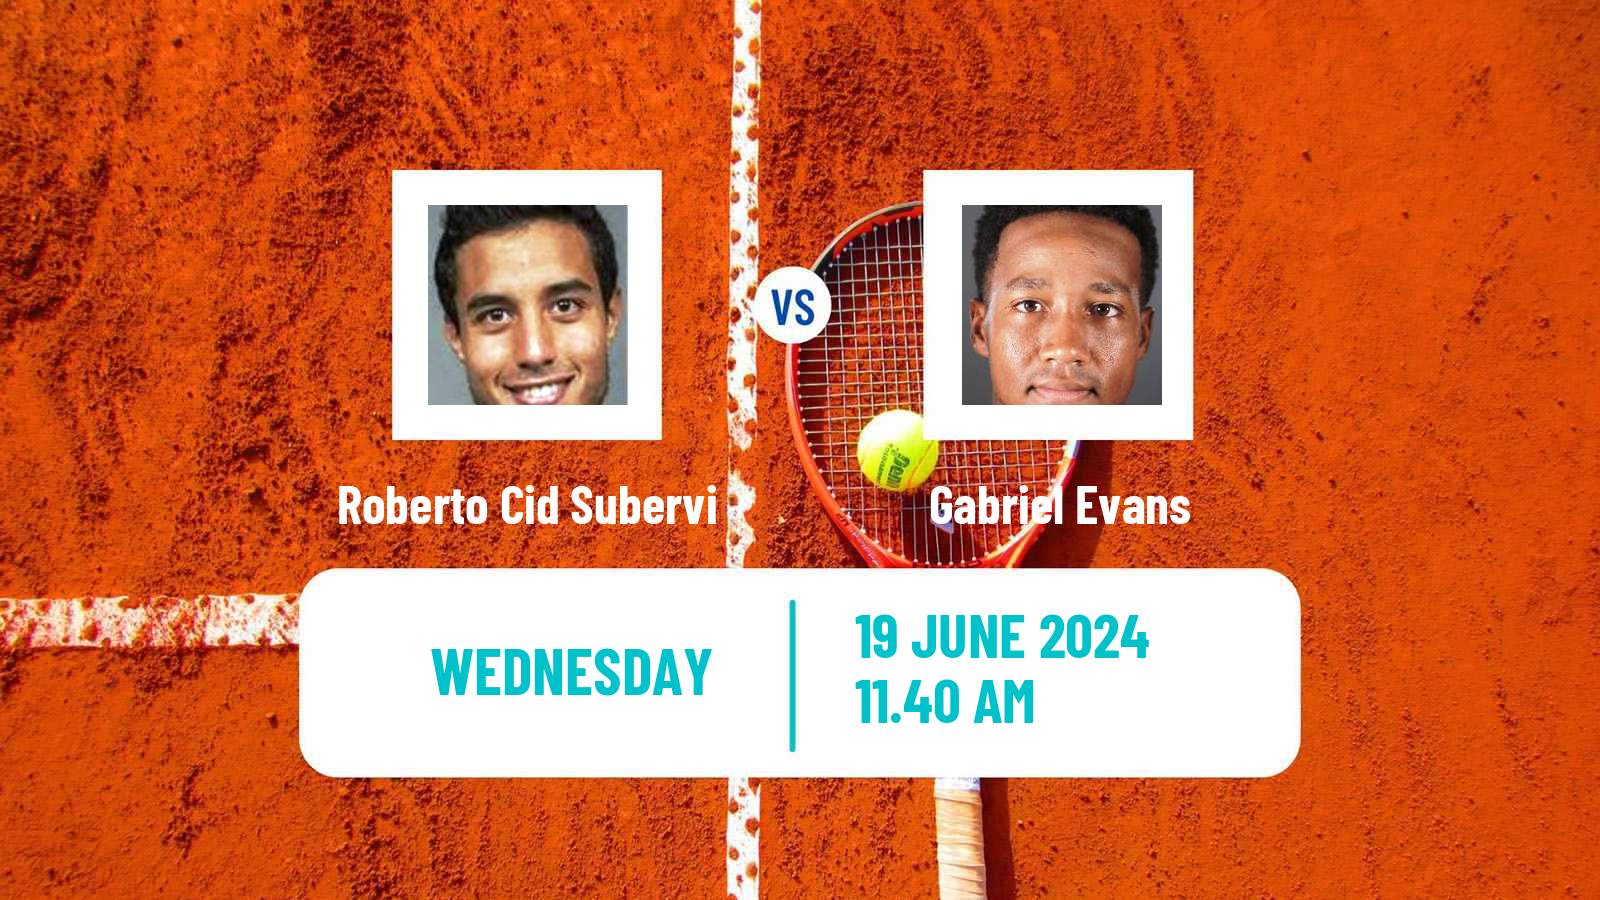 Tennis Davis Cup Group III Roberto Cid Subervi - Gabriel Evans